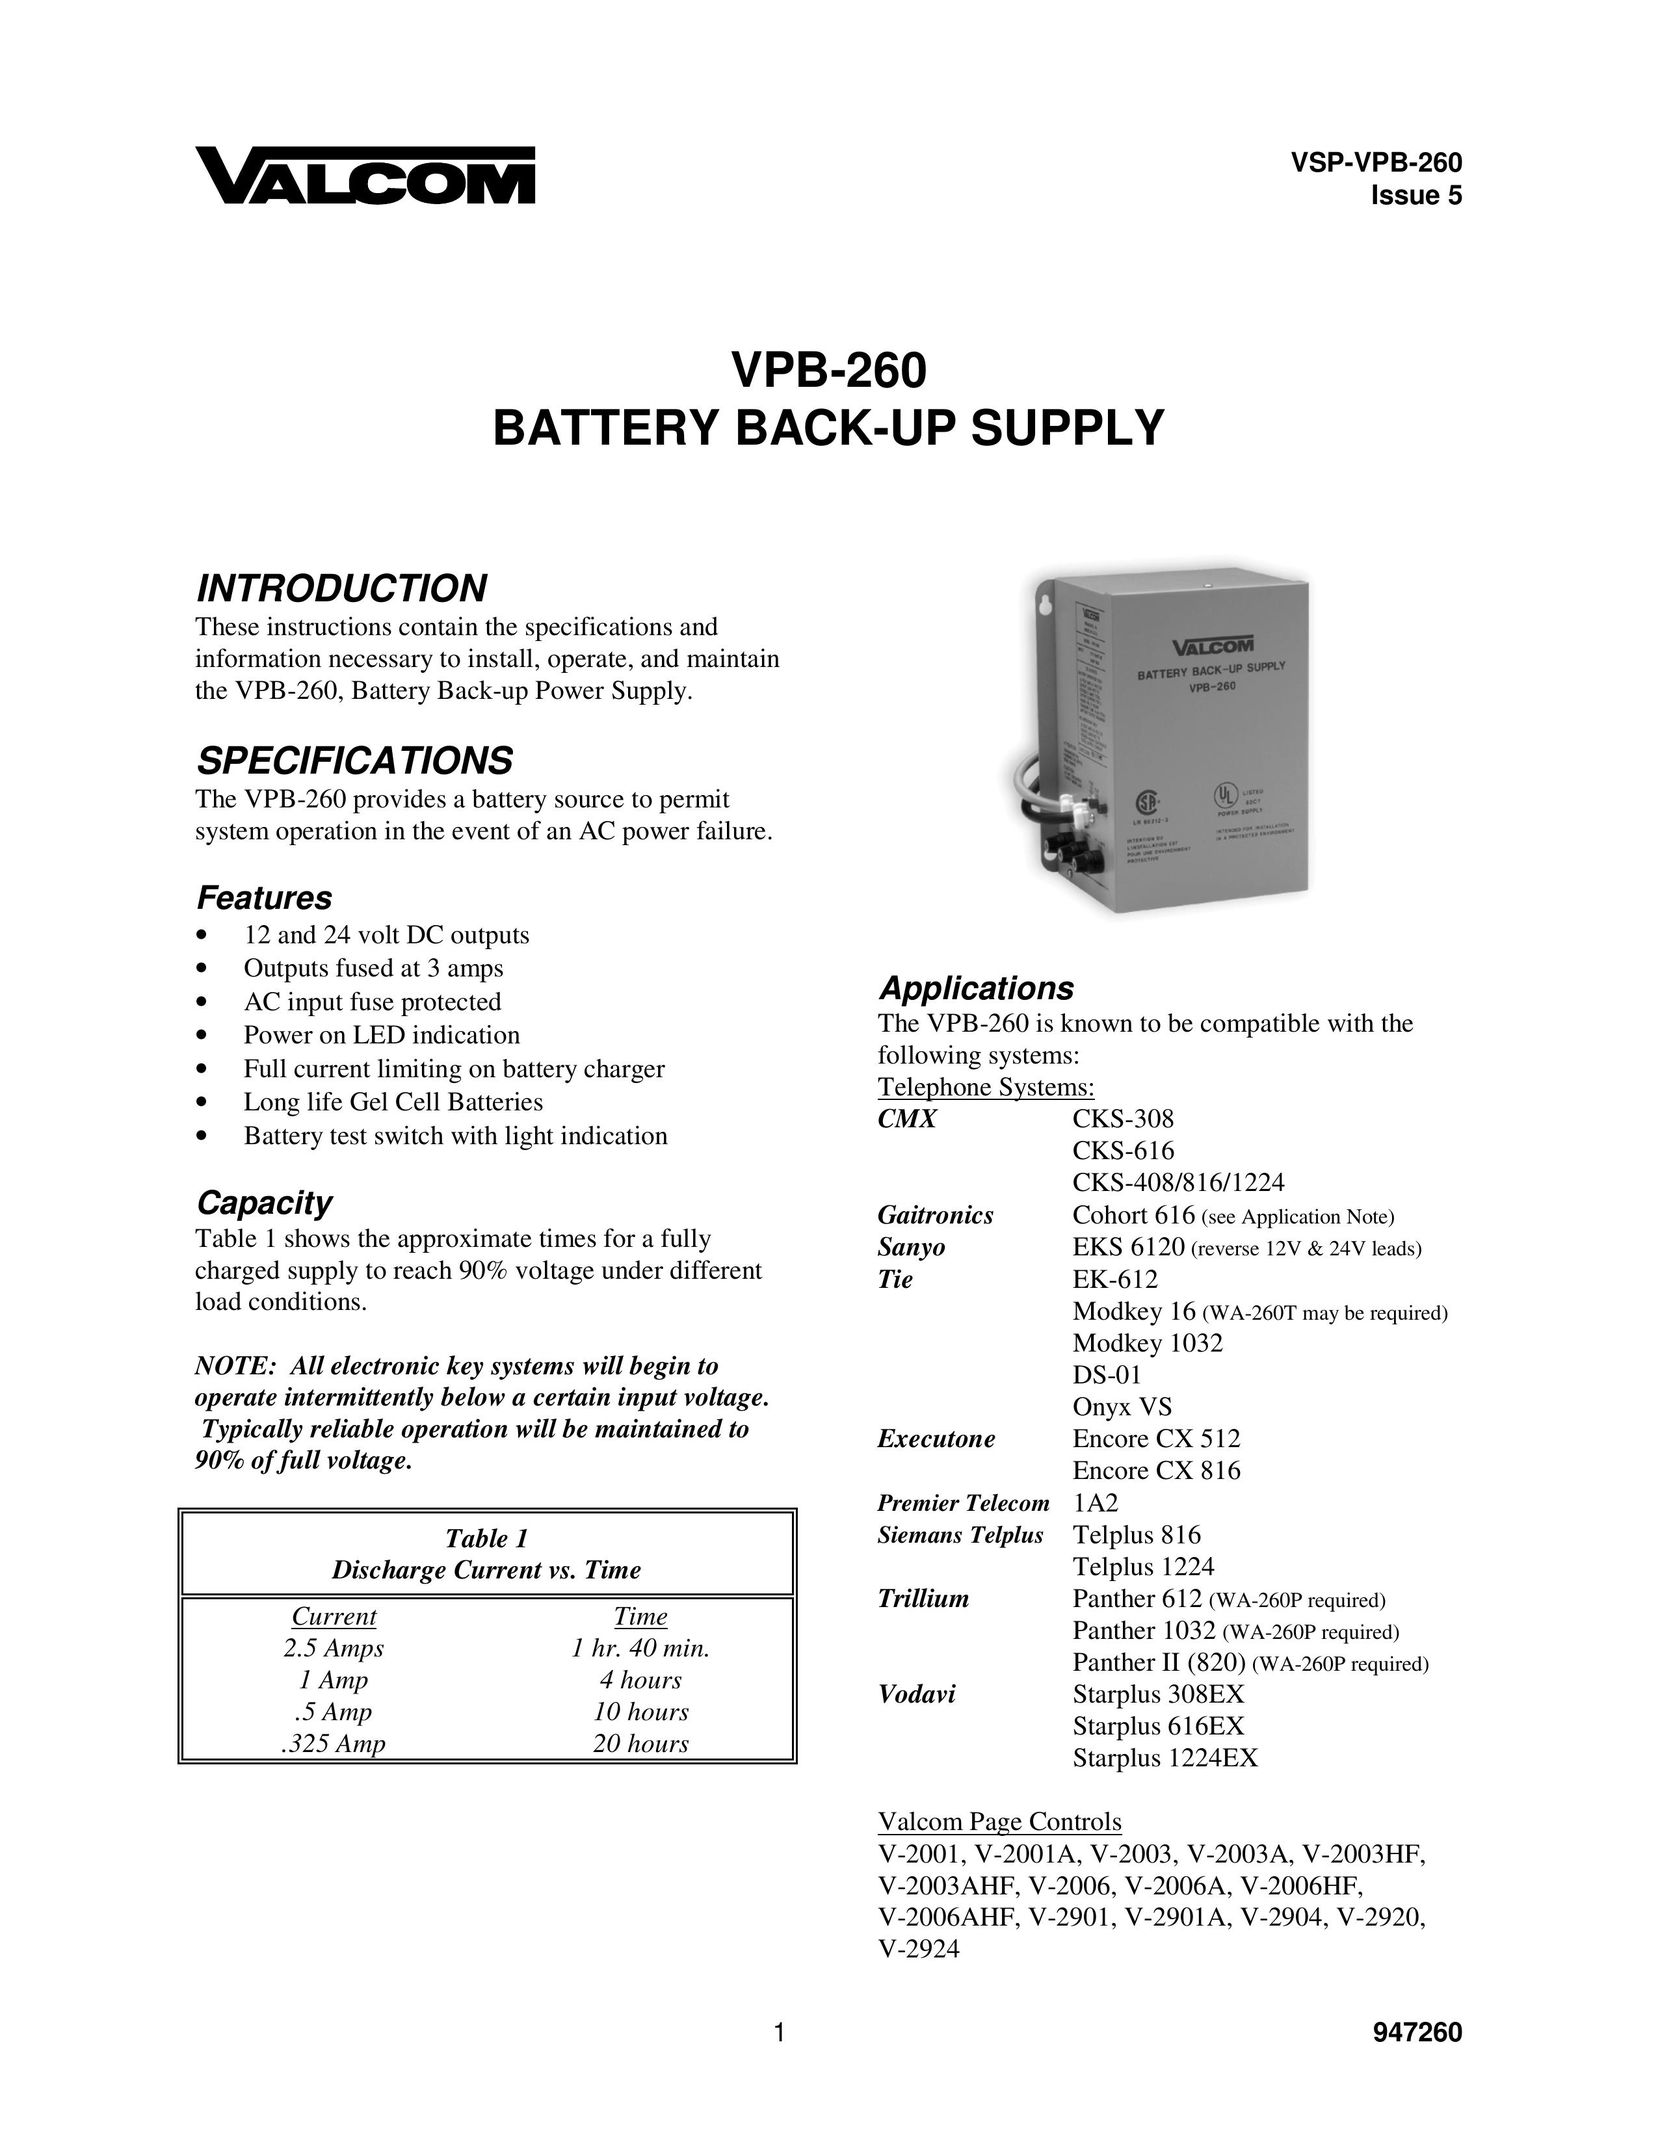 Valcom VPB-260 Battery Charger User Manual